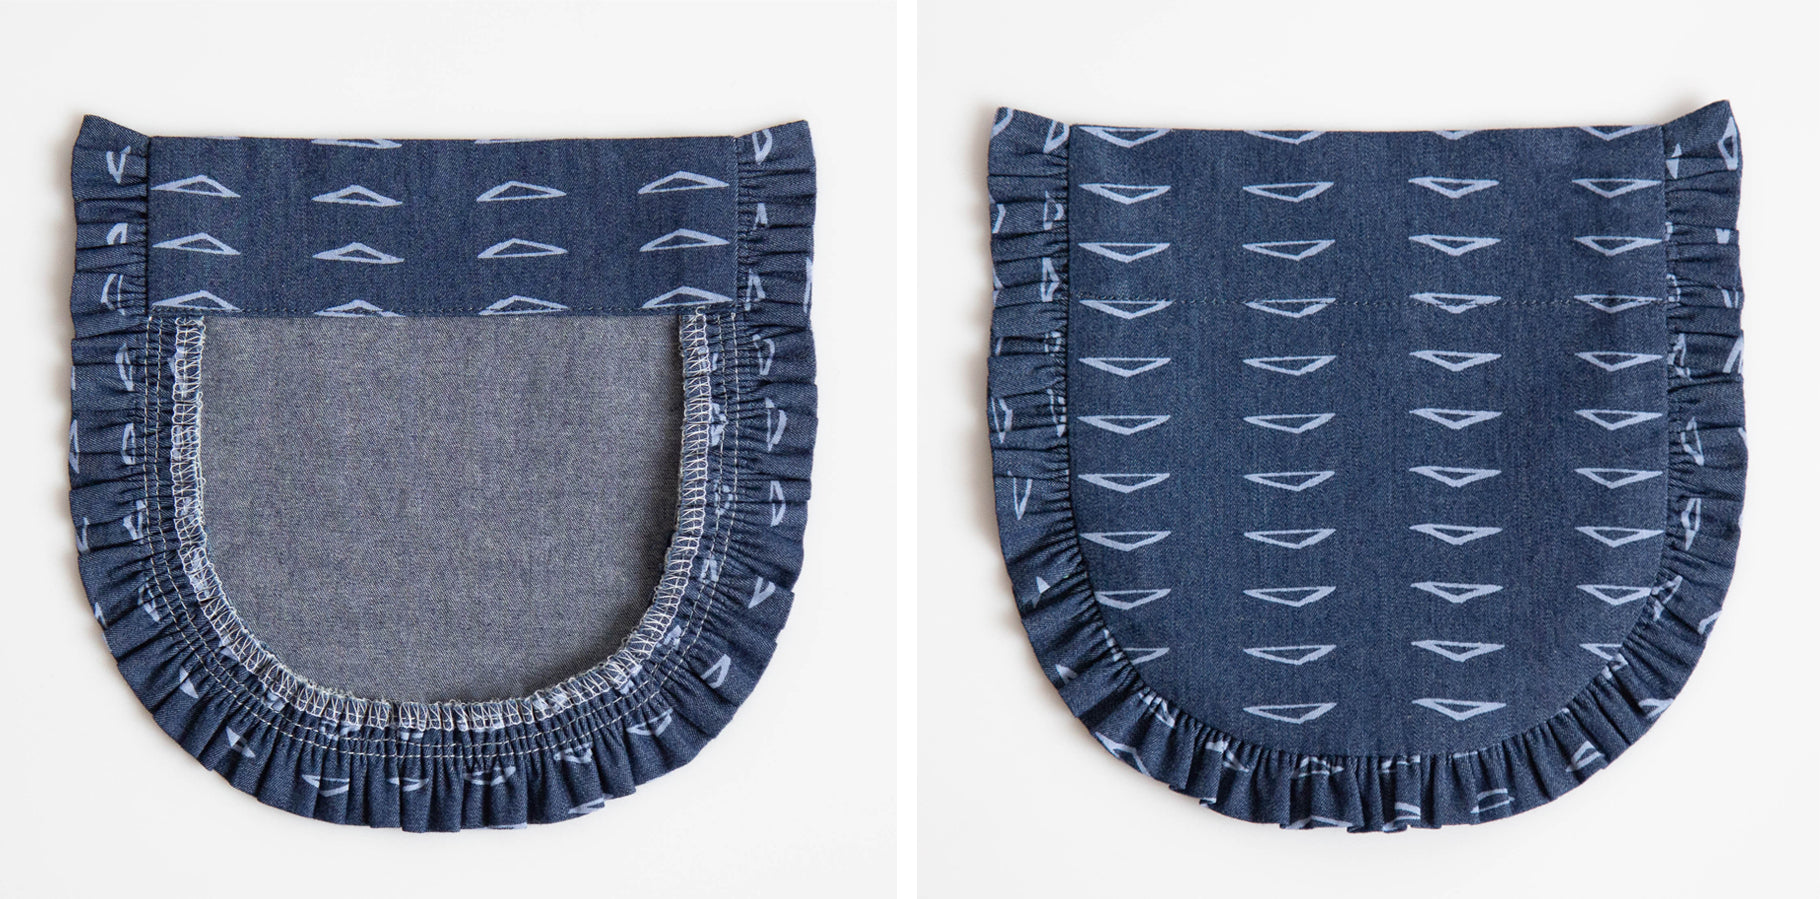 Reed Skirt Modification: Ruffled Patch pockets tutorial | Grainline Studio